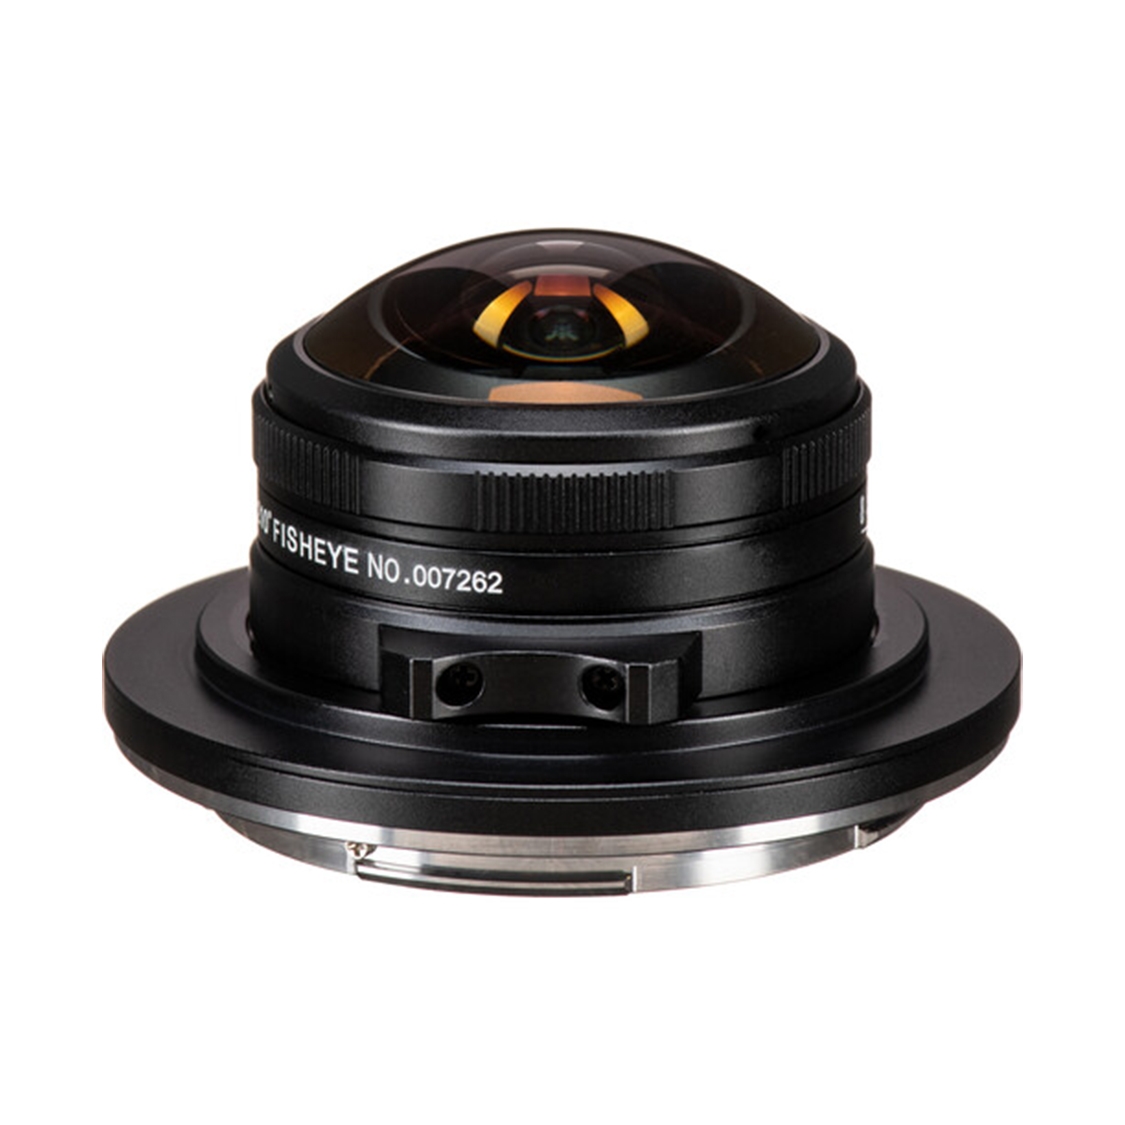 Laowa 4mm f2.8 Fisheye Lens for Nikon Z Mount